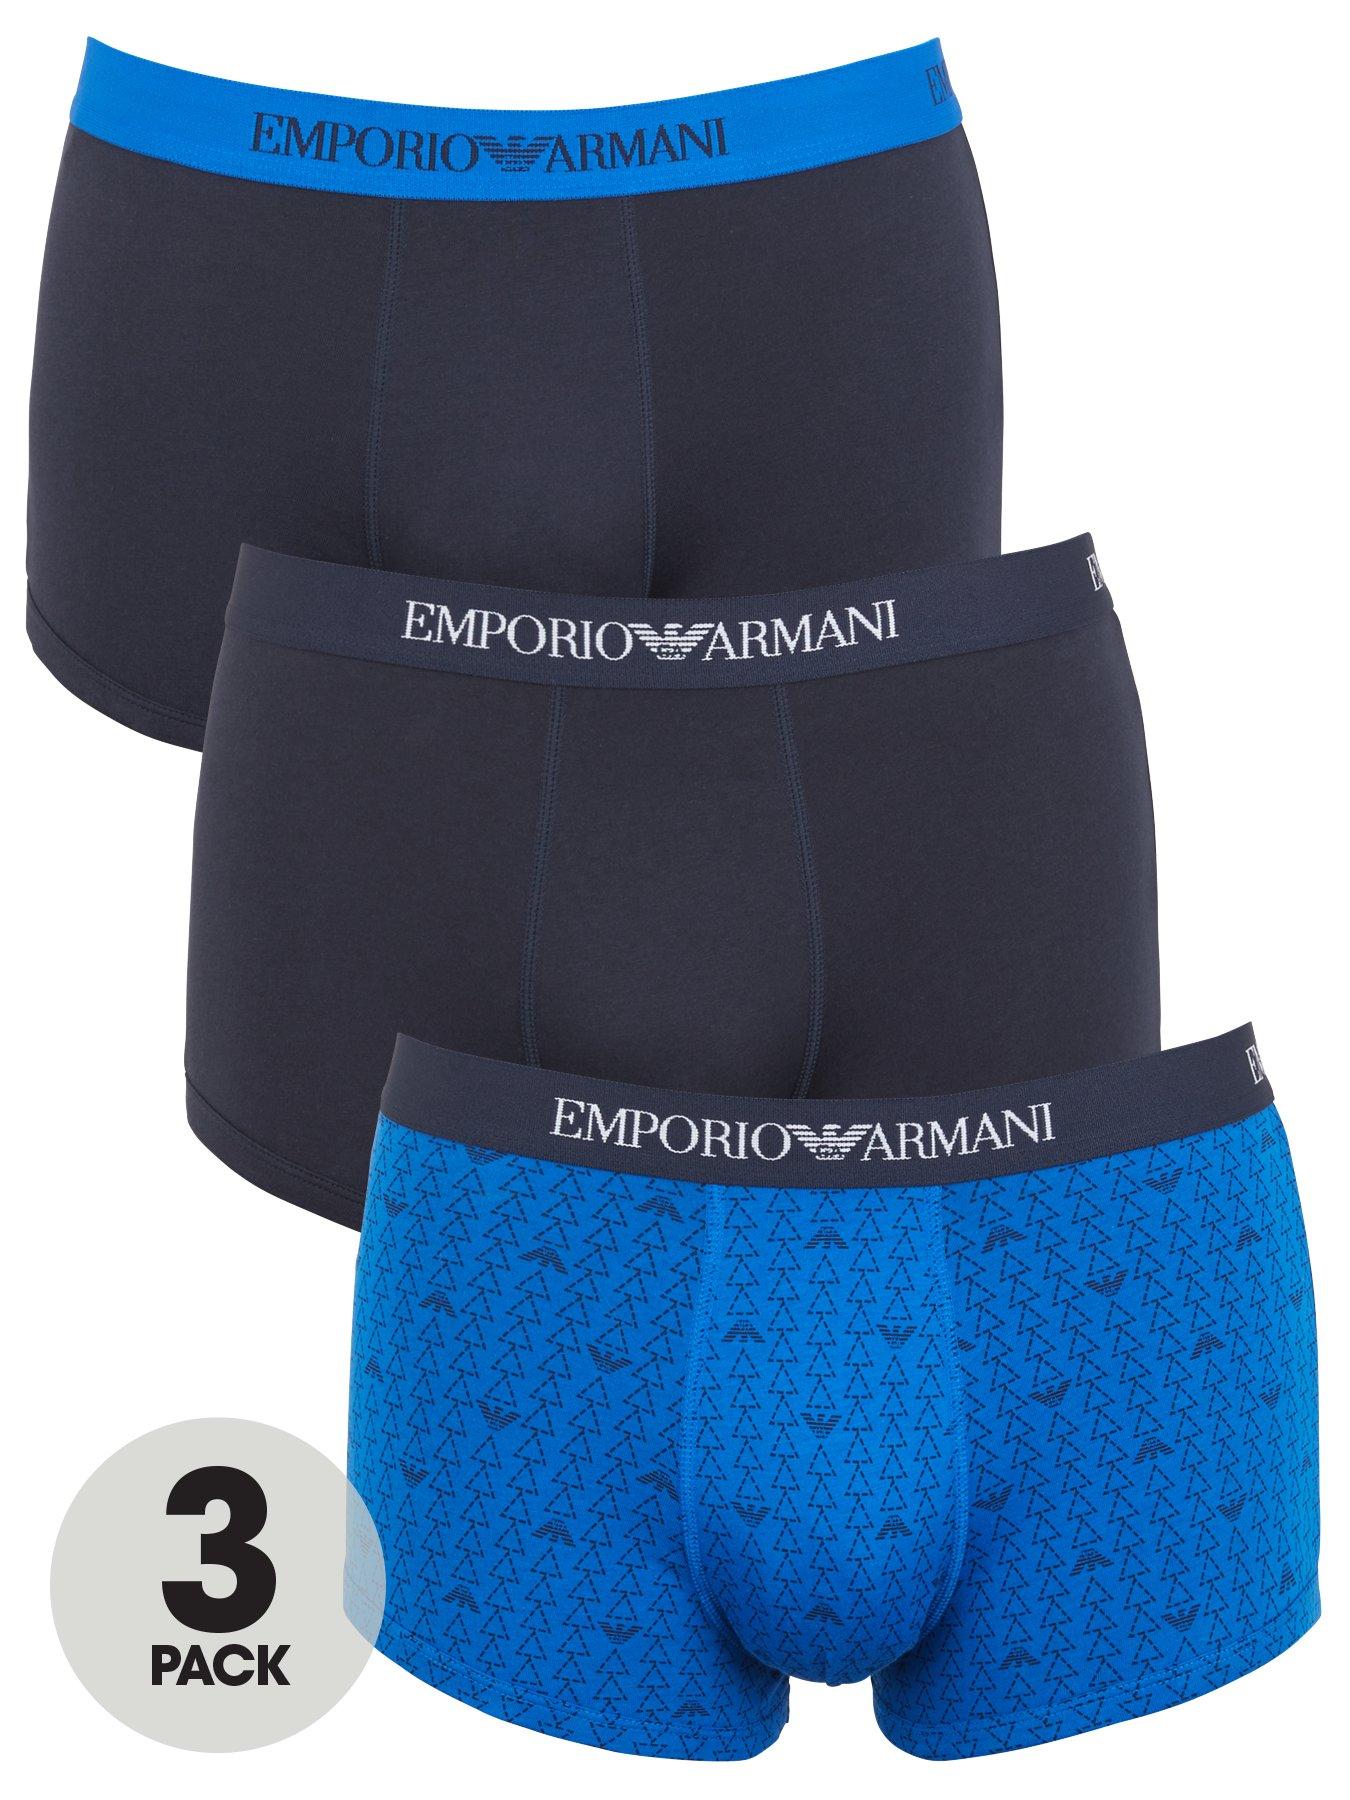 Emporio Armani Bodywear Trunks (3 Pack) - Blue/Multi, Blue Multi, Size L, Men